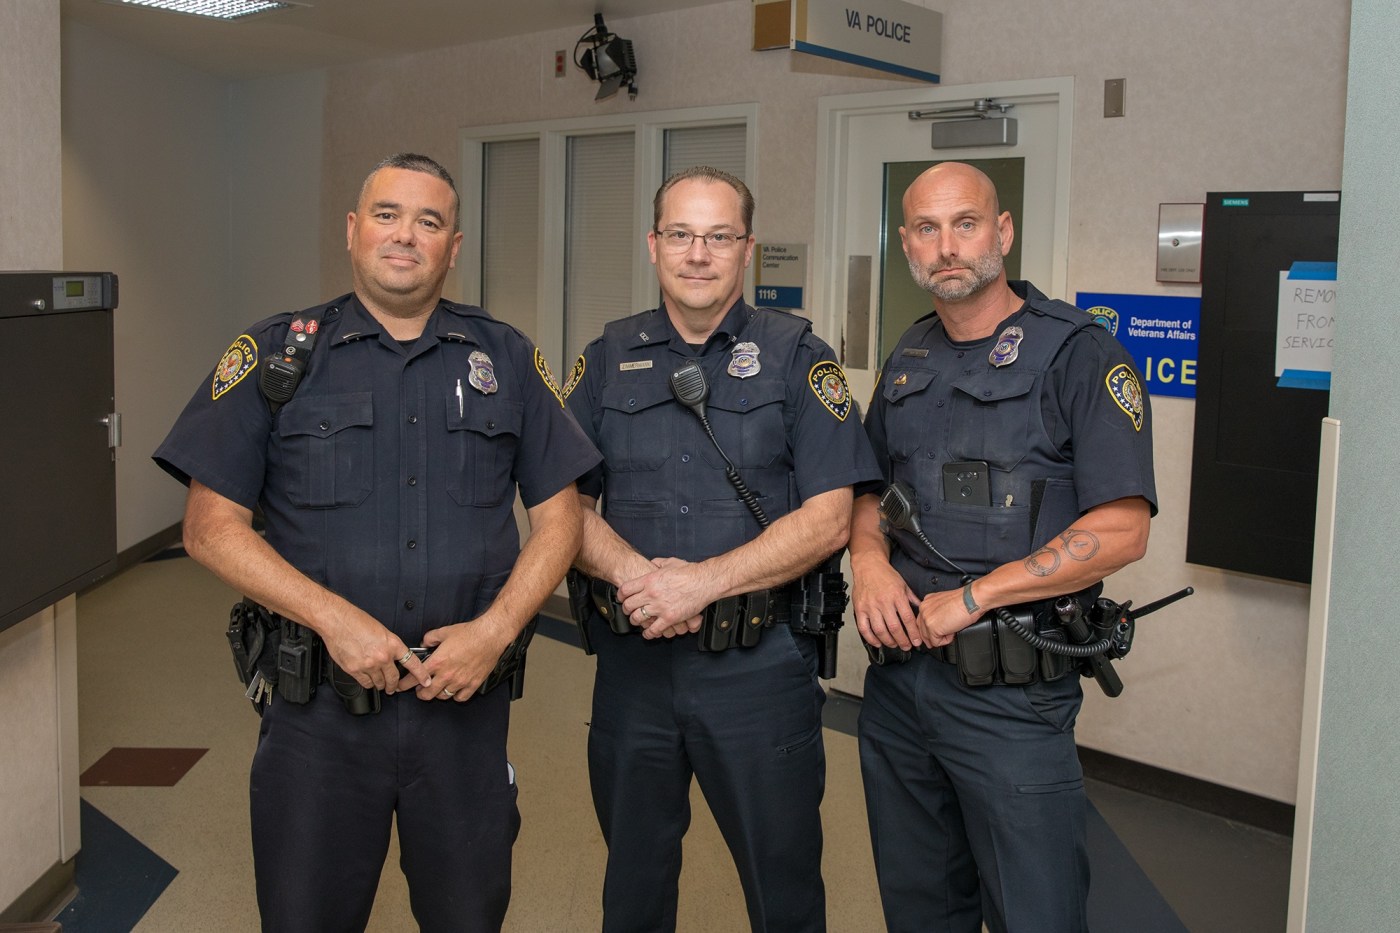 Milwaukee VA Police Officers (left to right) Joseph Tripp, Christopher Zimmermann and Glenn Stritchko